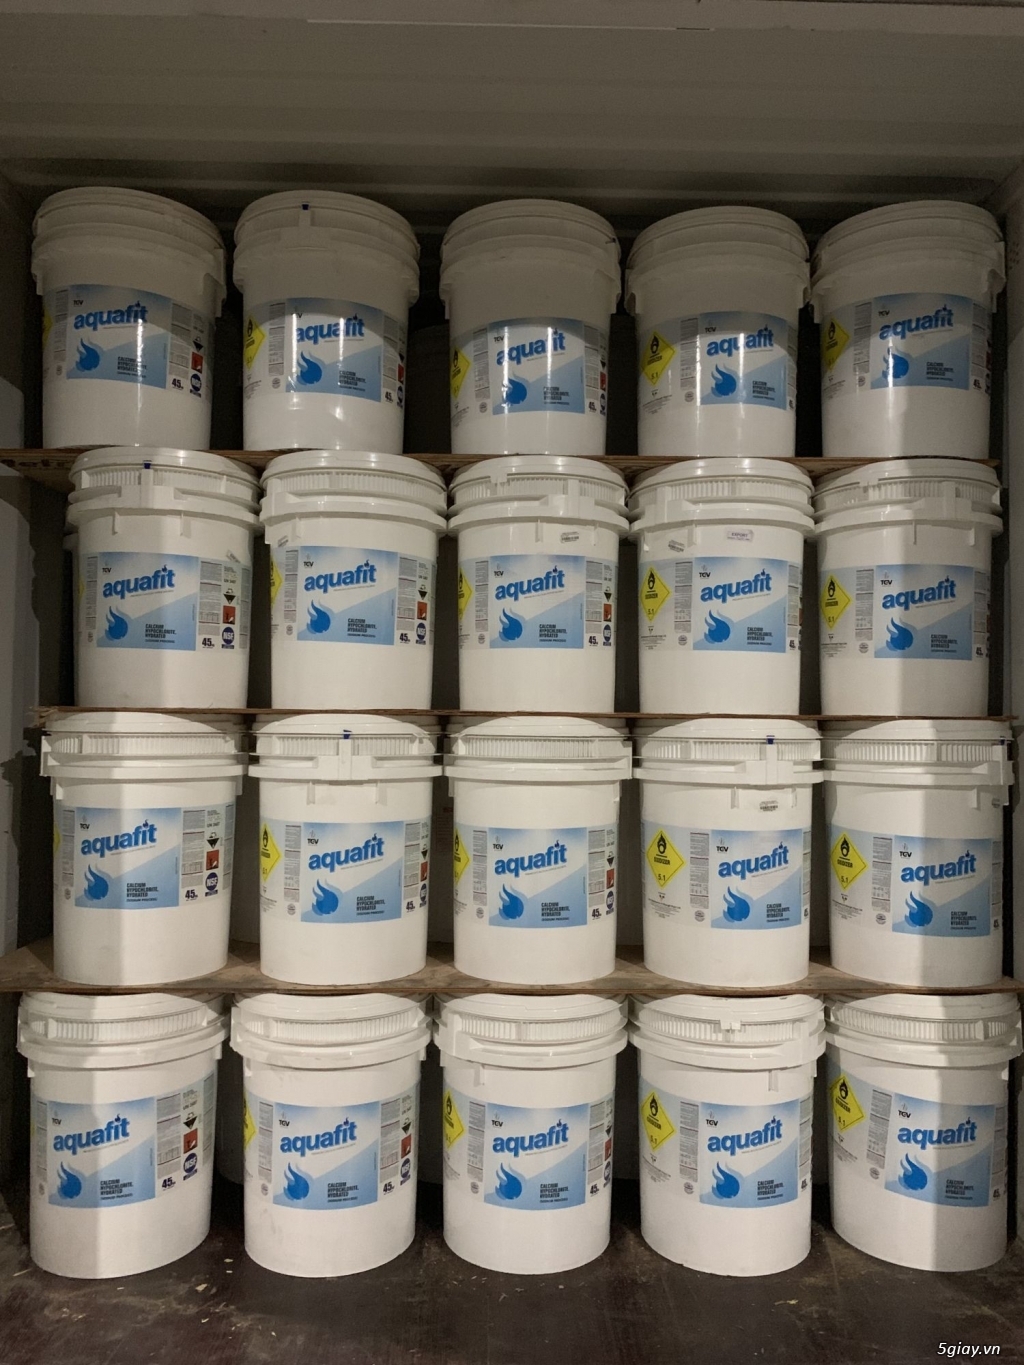 Ca(OCl)2 - Calcium Hypochlorite,70%, Ấn Độ, 45 kg/thùng - 2